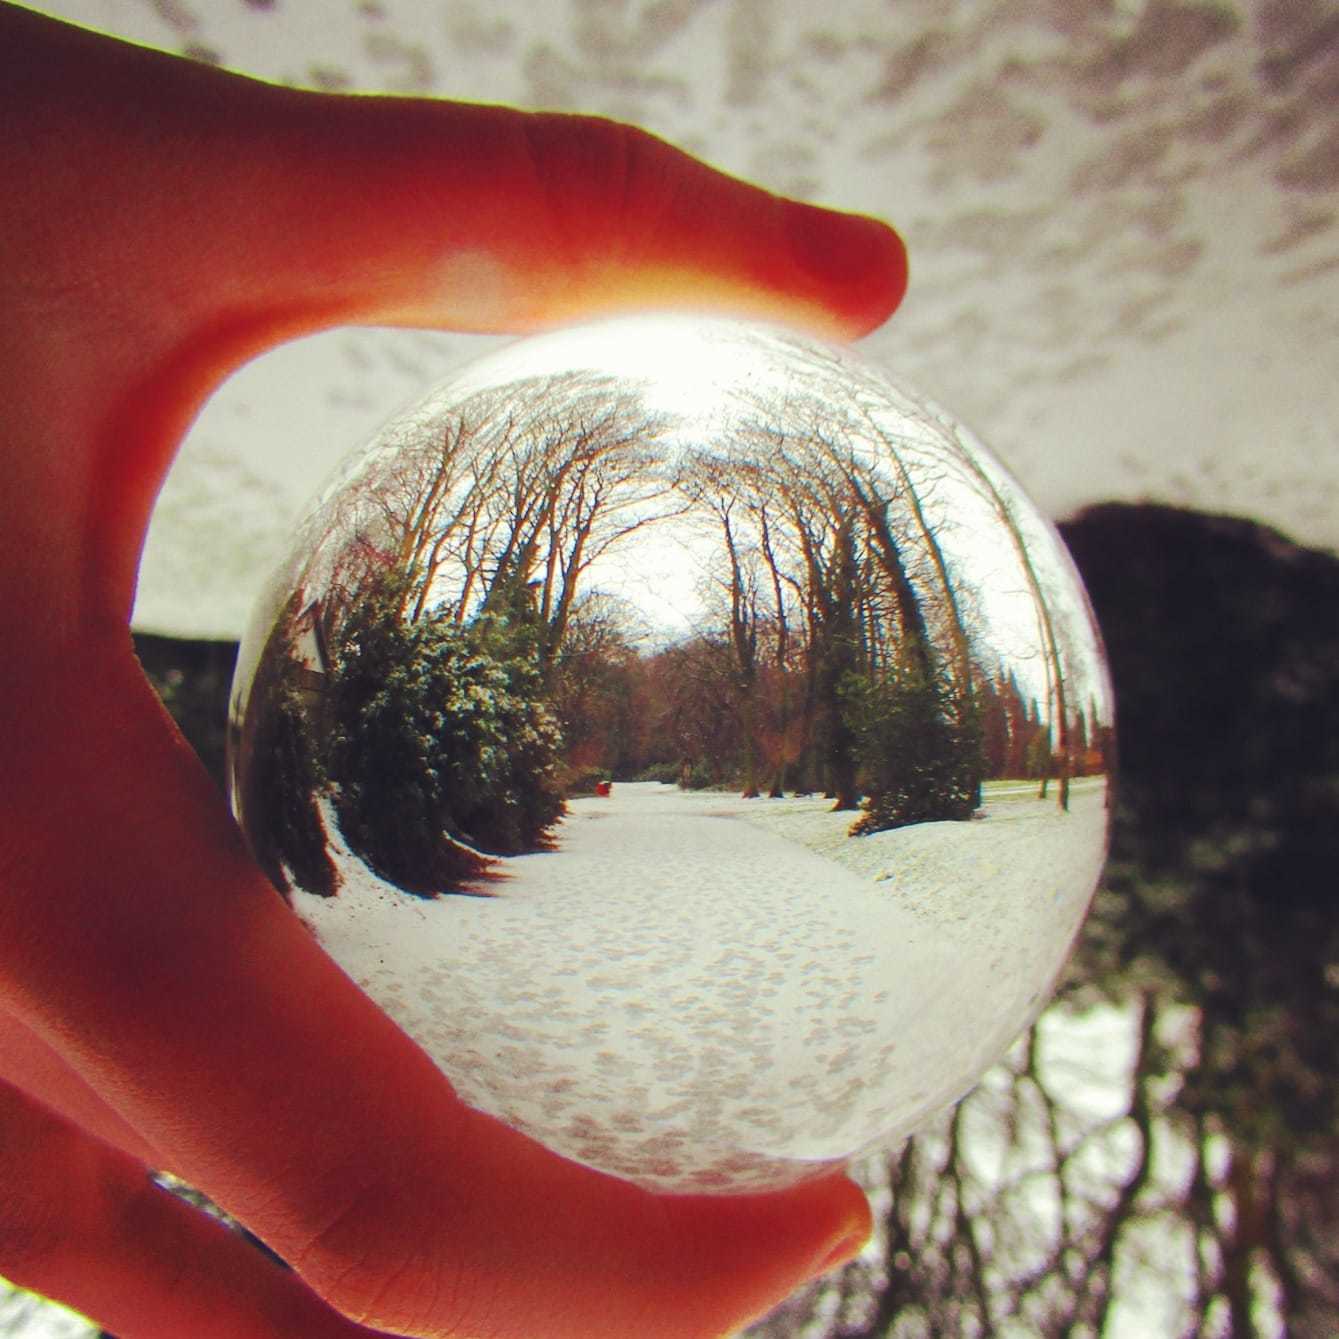 Through the crystal ball